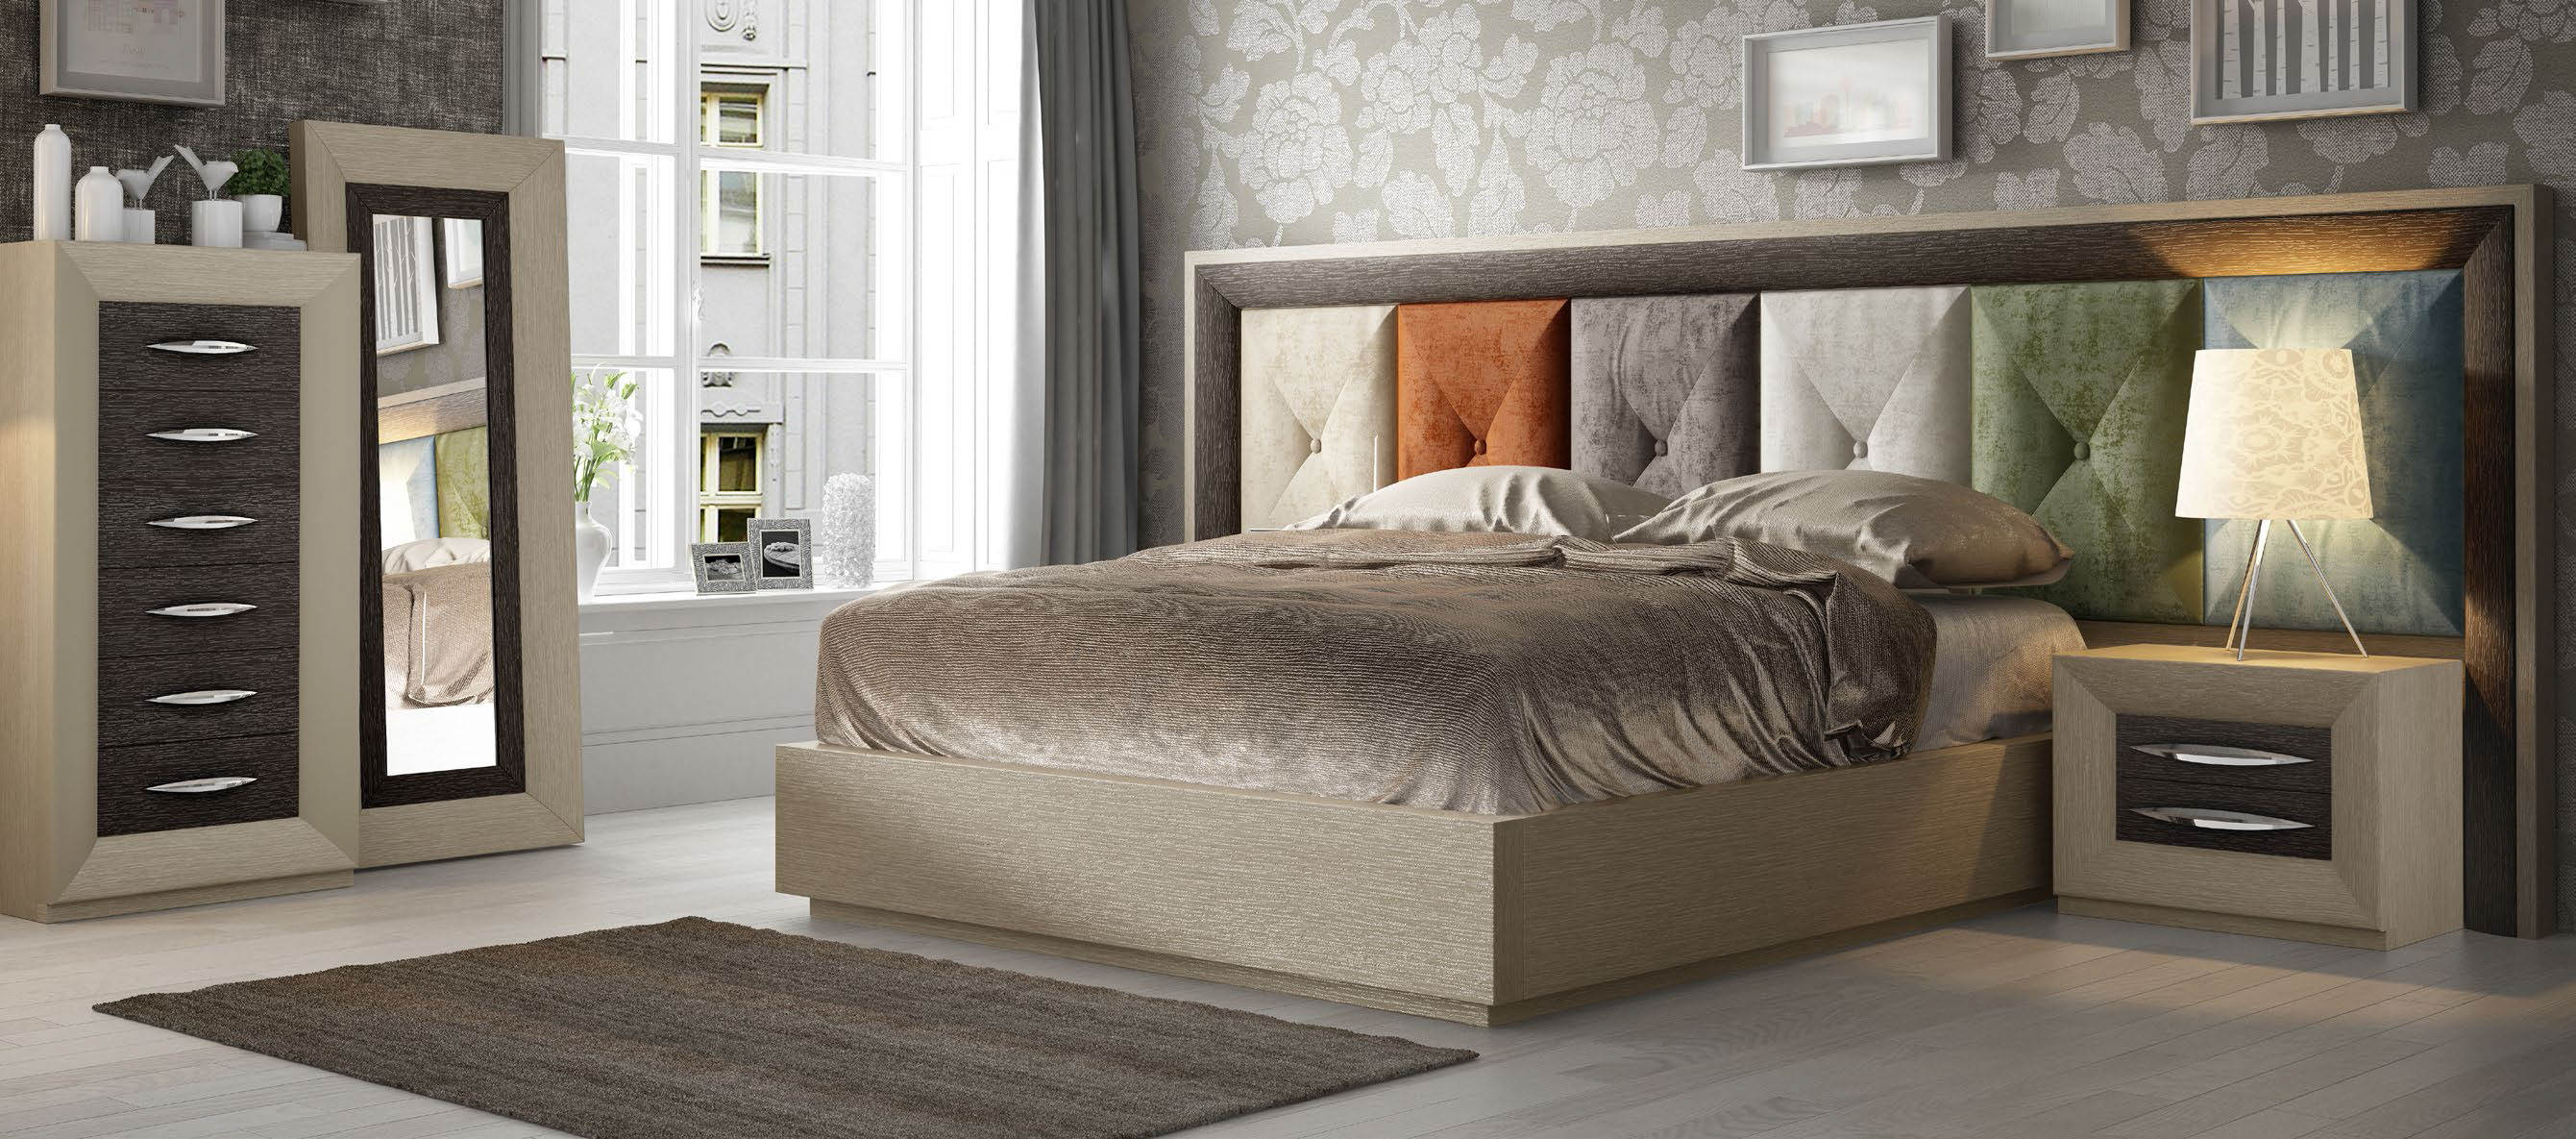 Brands Franco Furniture Bedrooms vol1, Spain DOR 121